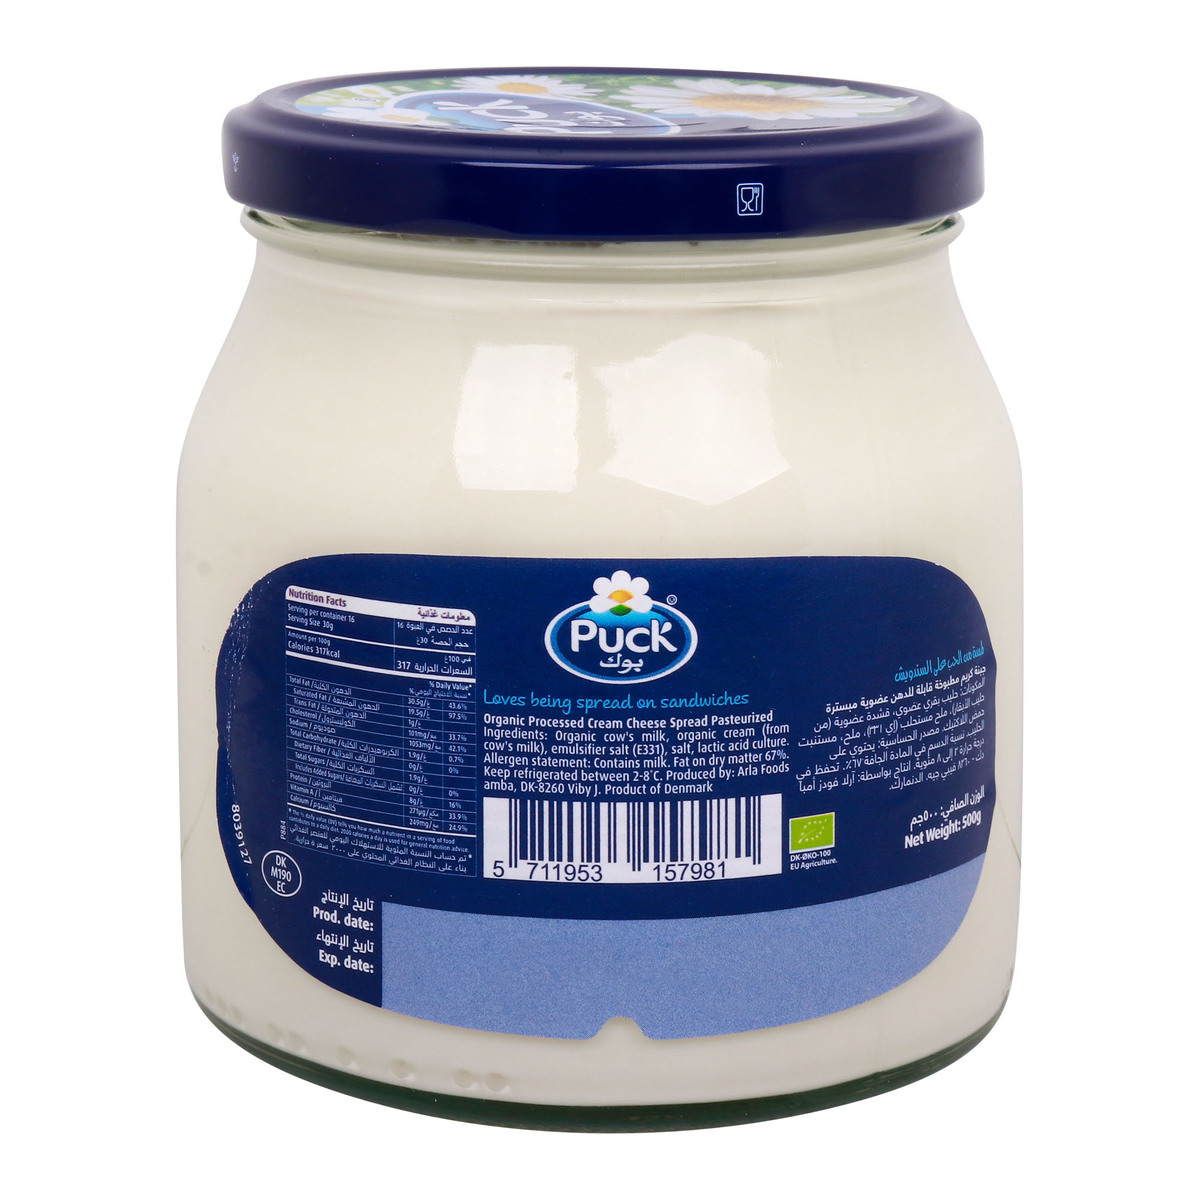 Puck Organic Cream Cheese Spread, 500 g